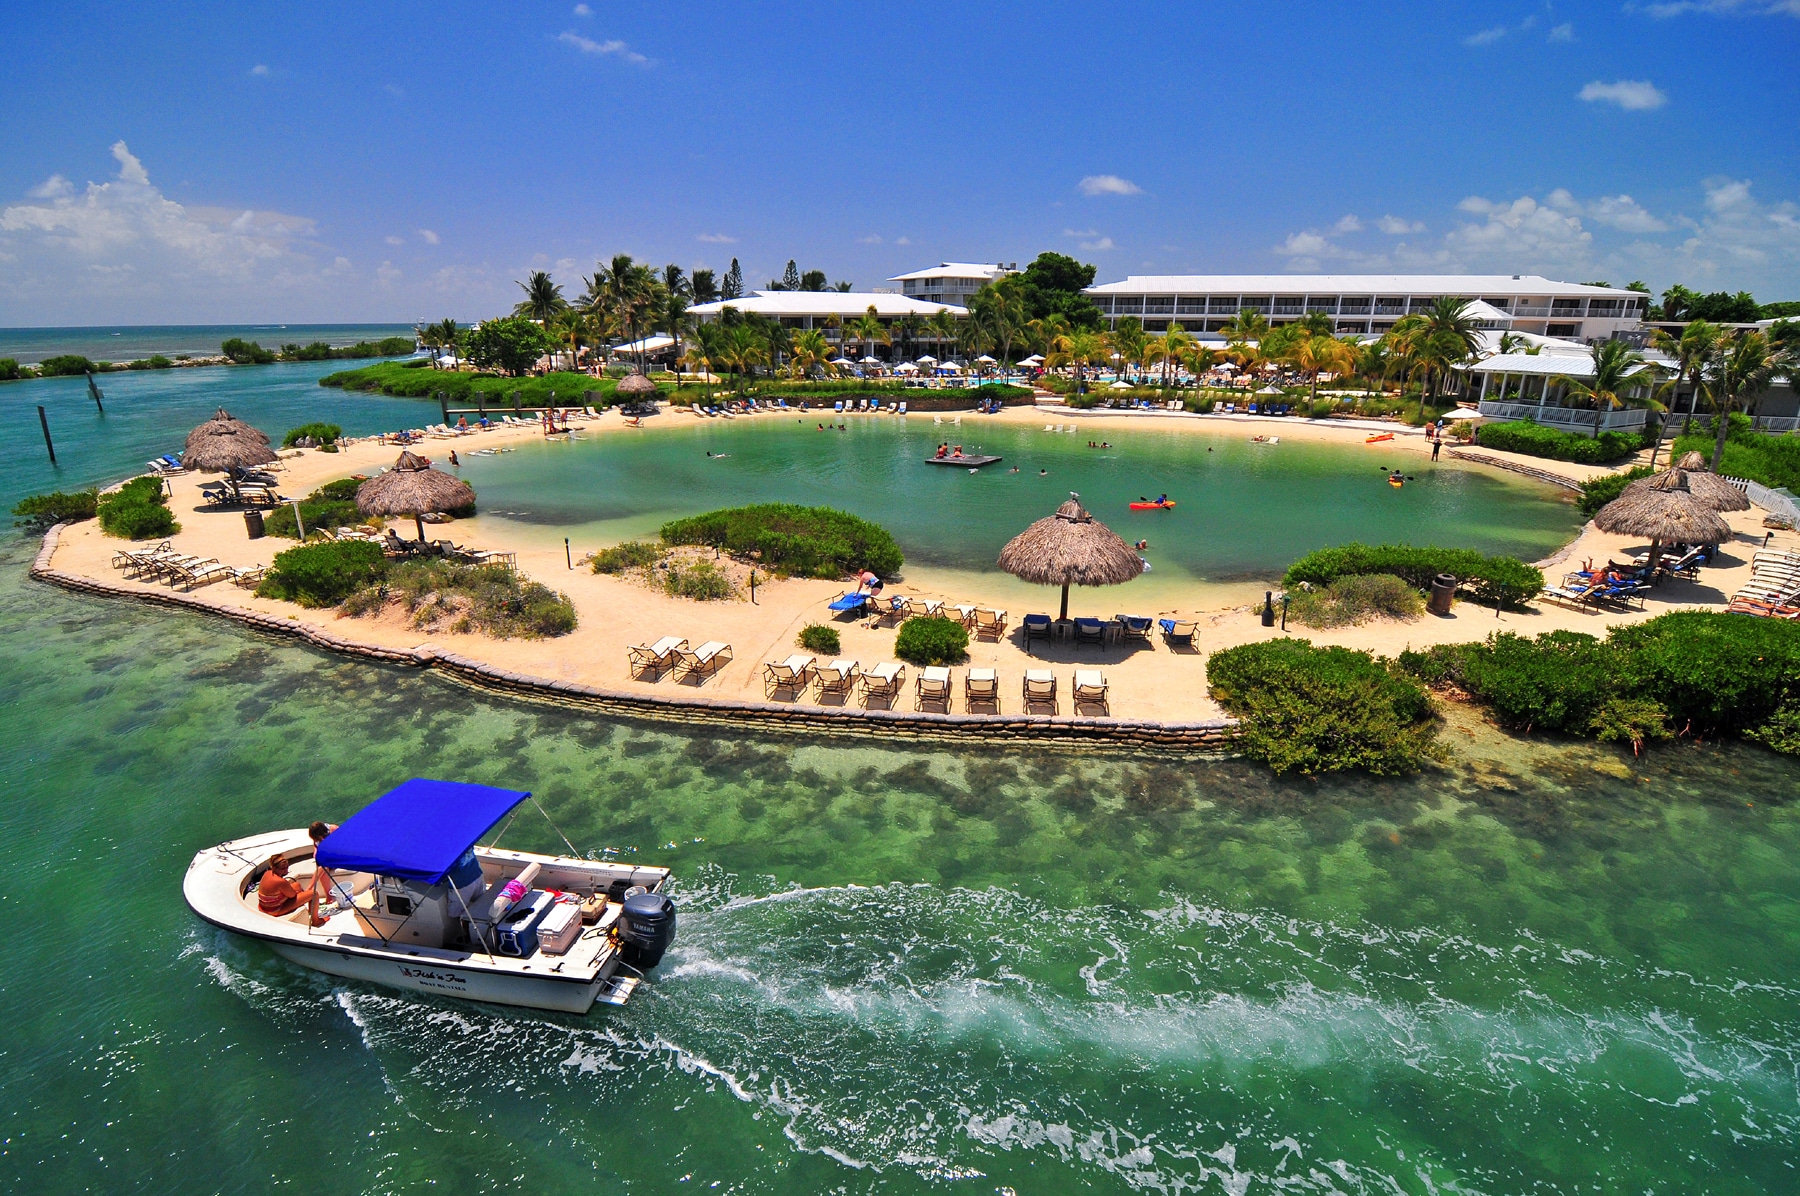 Black Friday Cyber Monday Travel Deals: Hawks Cay Resort